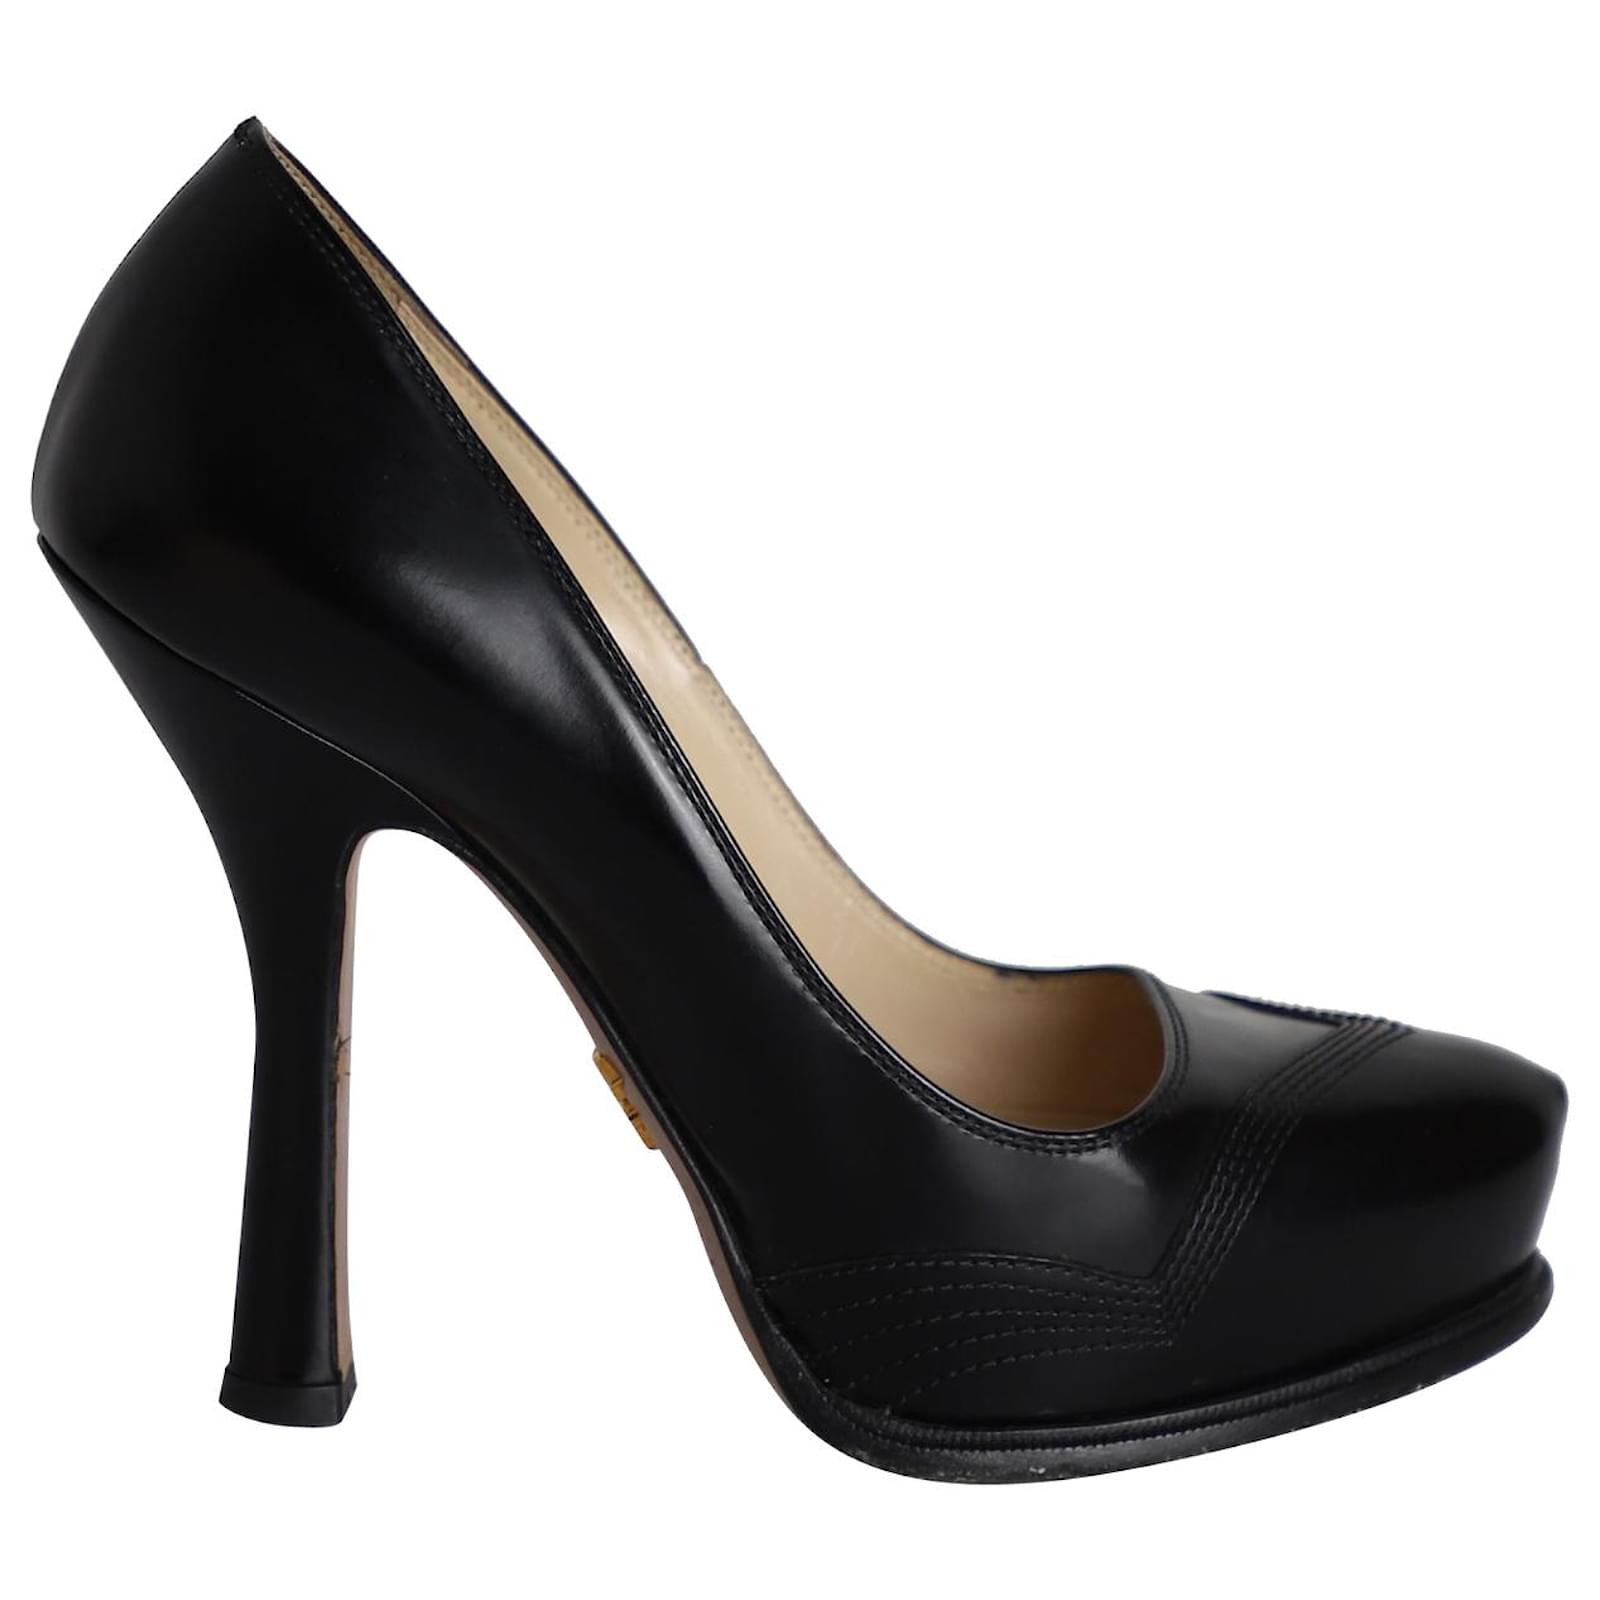 Buy Shinelly Women Criss Cross High Heel Stiletto Platform Pumps, Black,  7.5 at Amazon.in